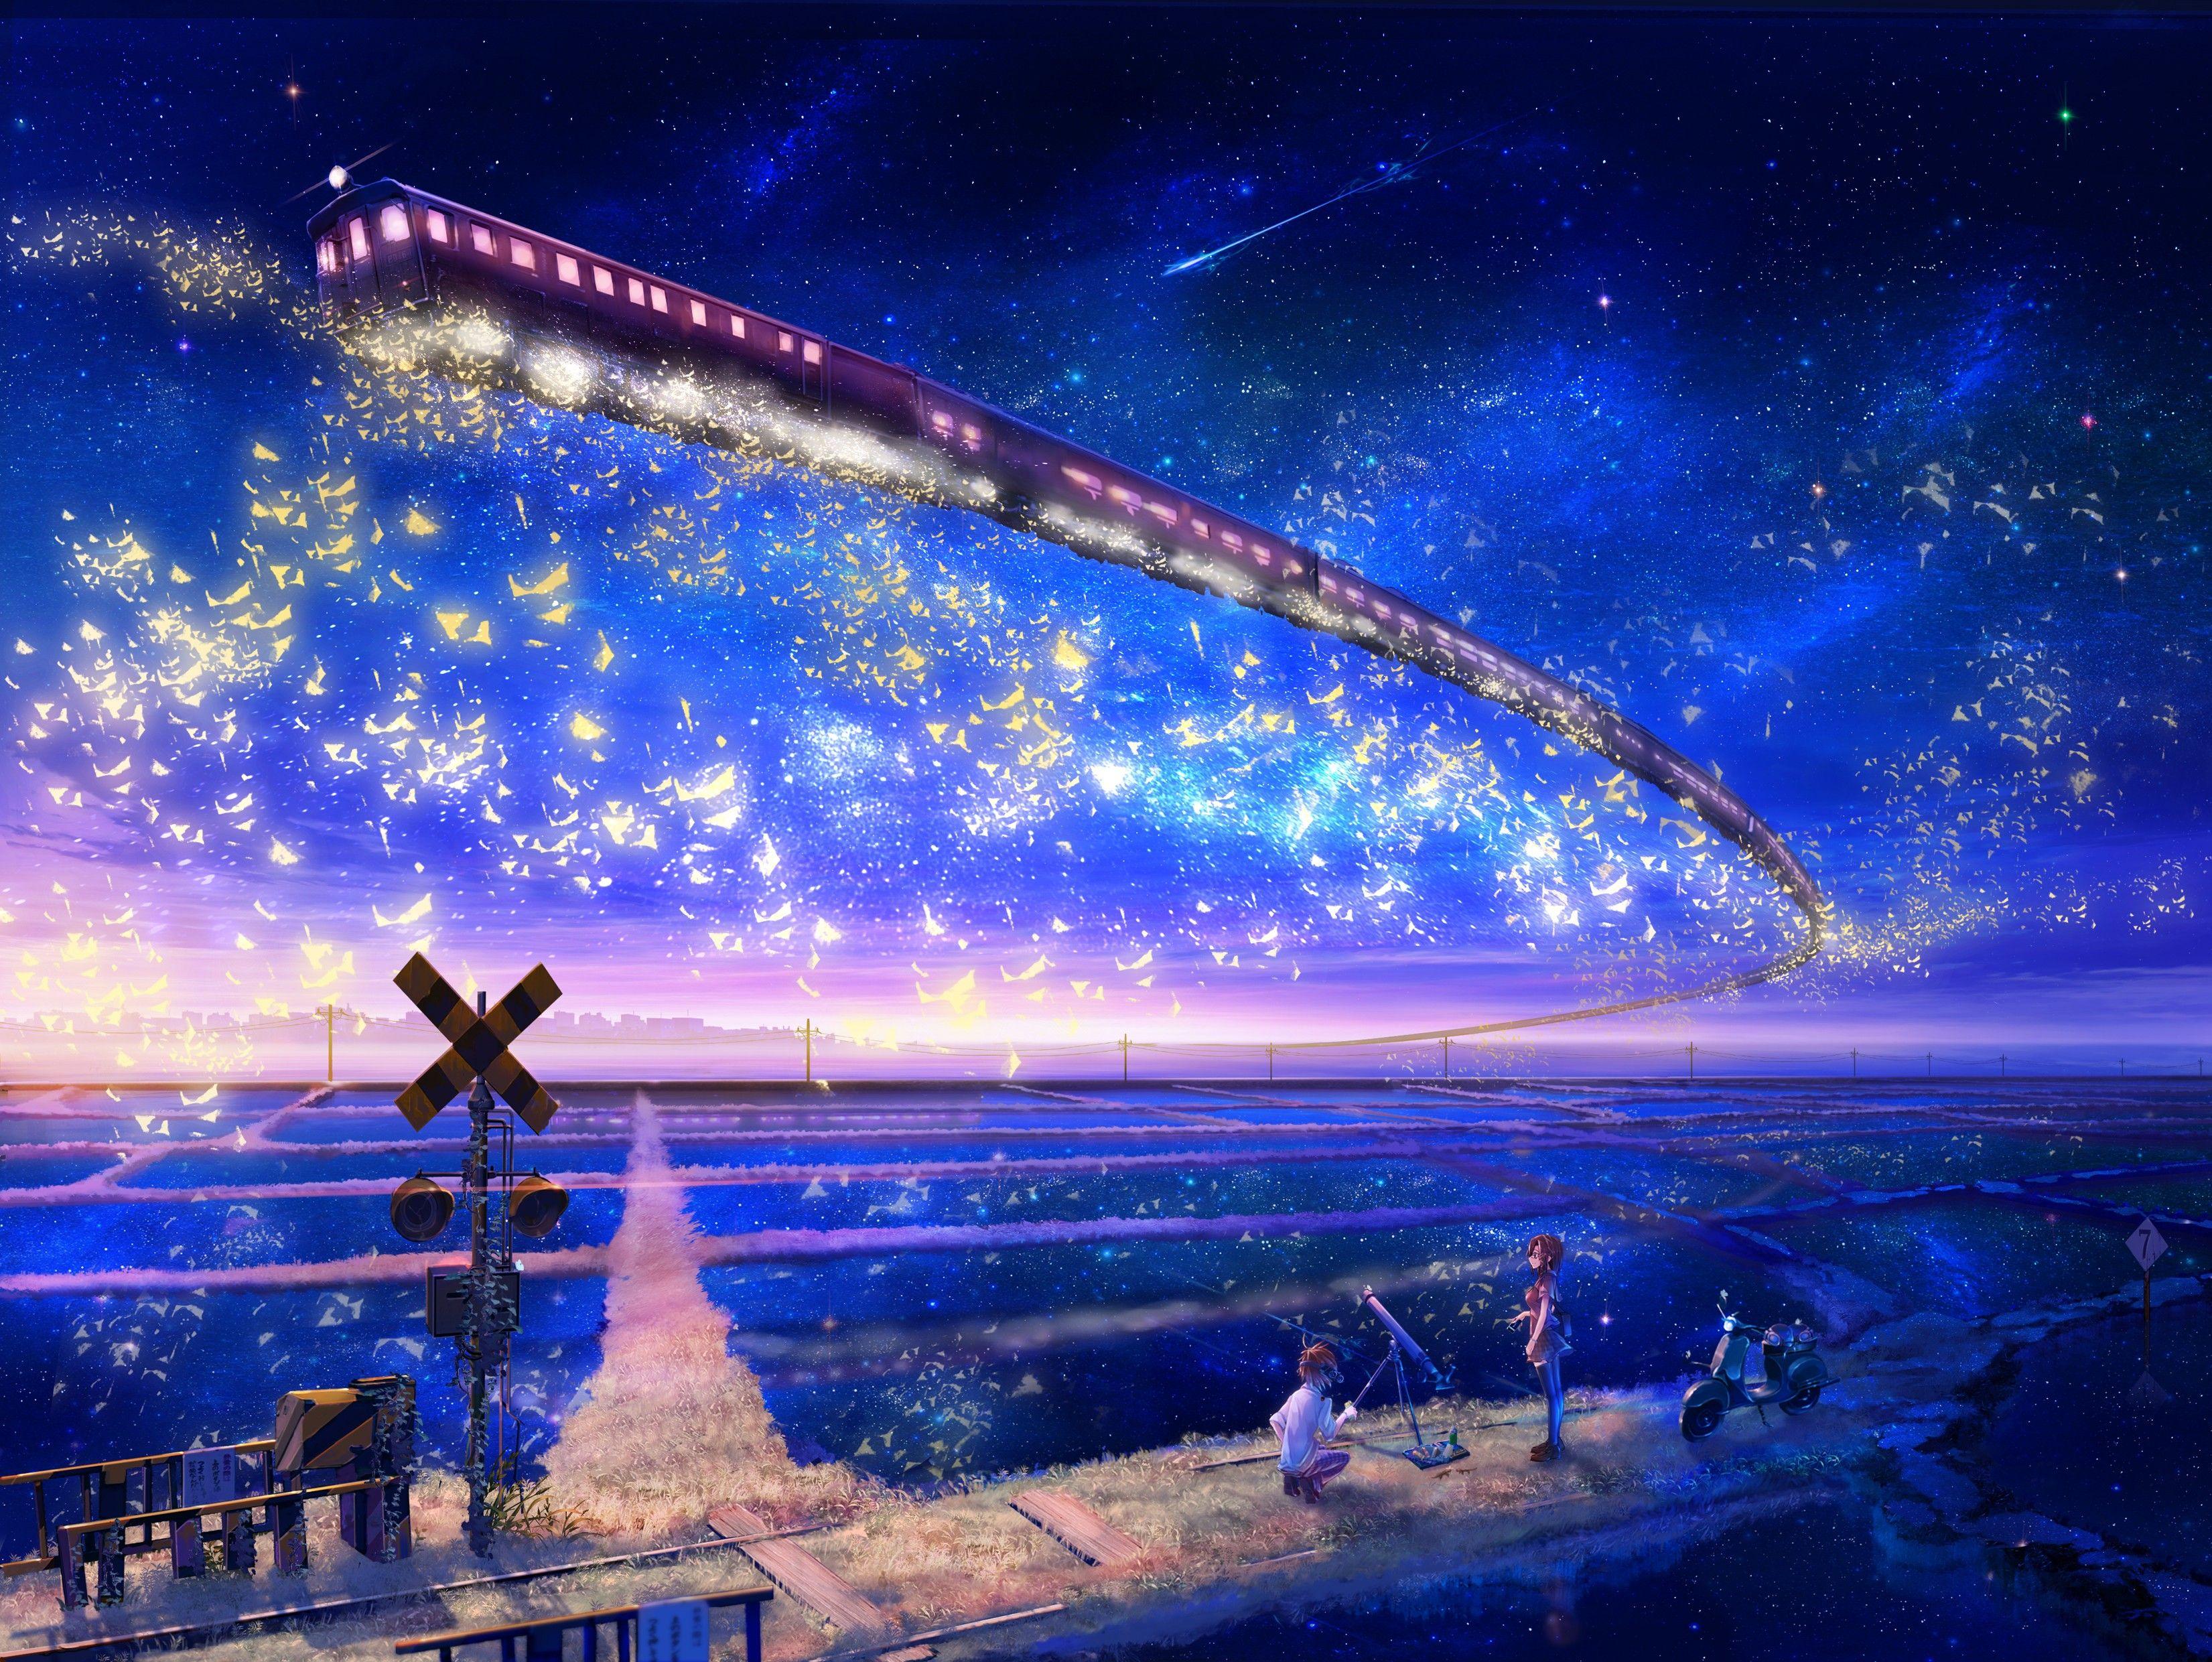 Beautiful Anime Night Landscape 2K wallpaper download